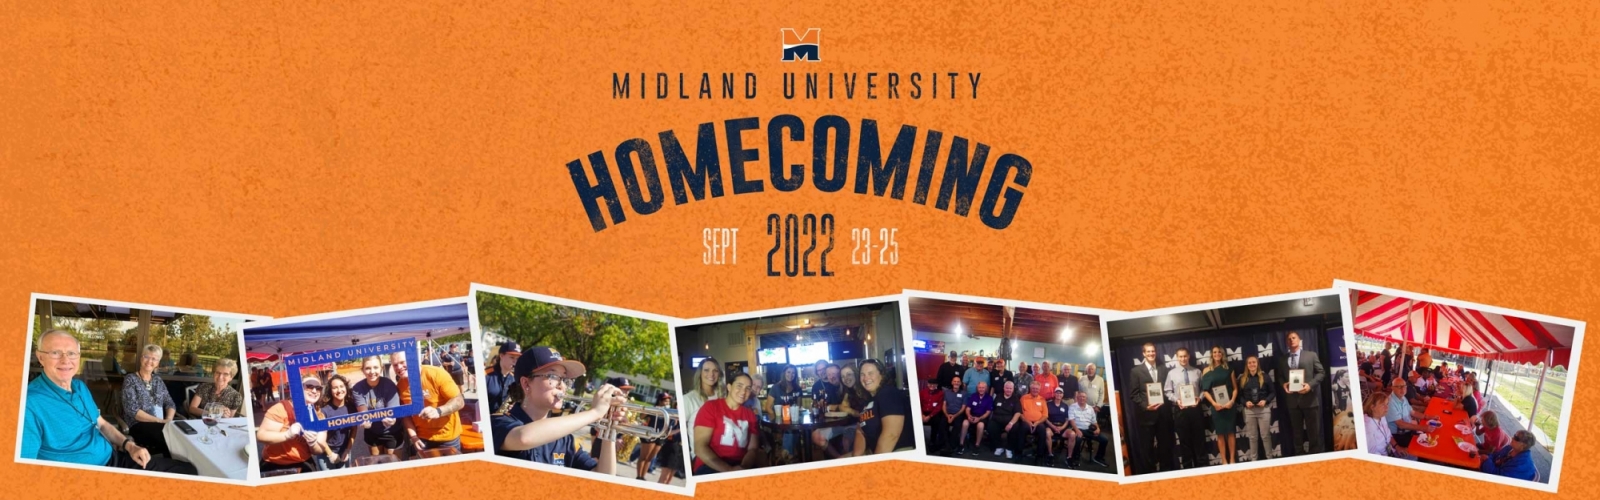 Midland Homecoming Set for Sept. 23-25